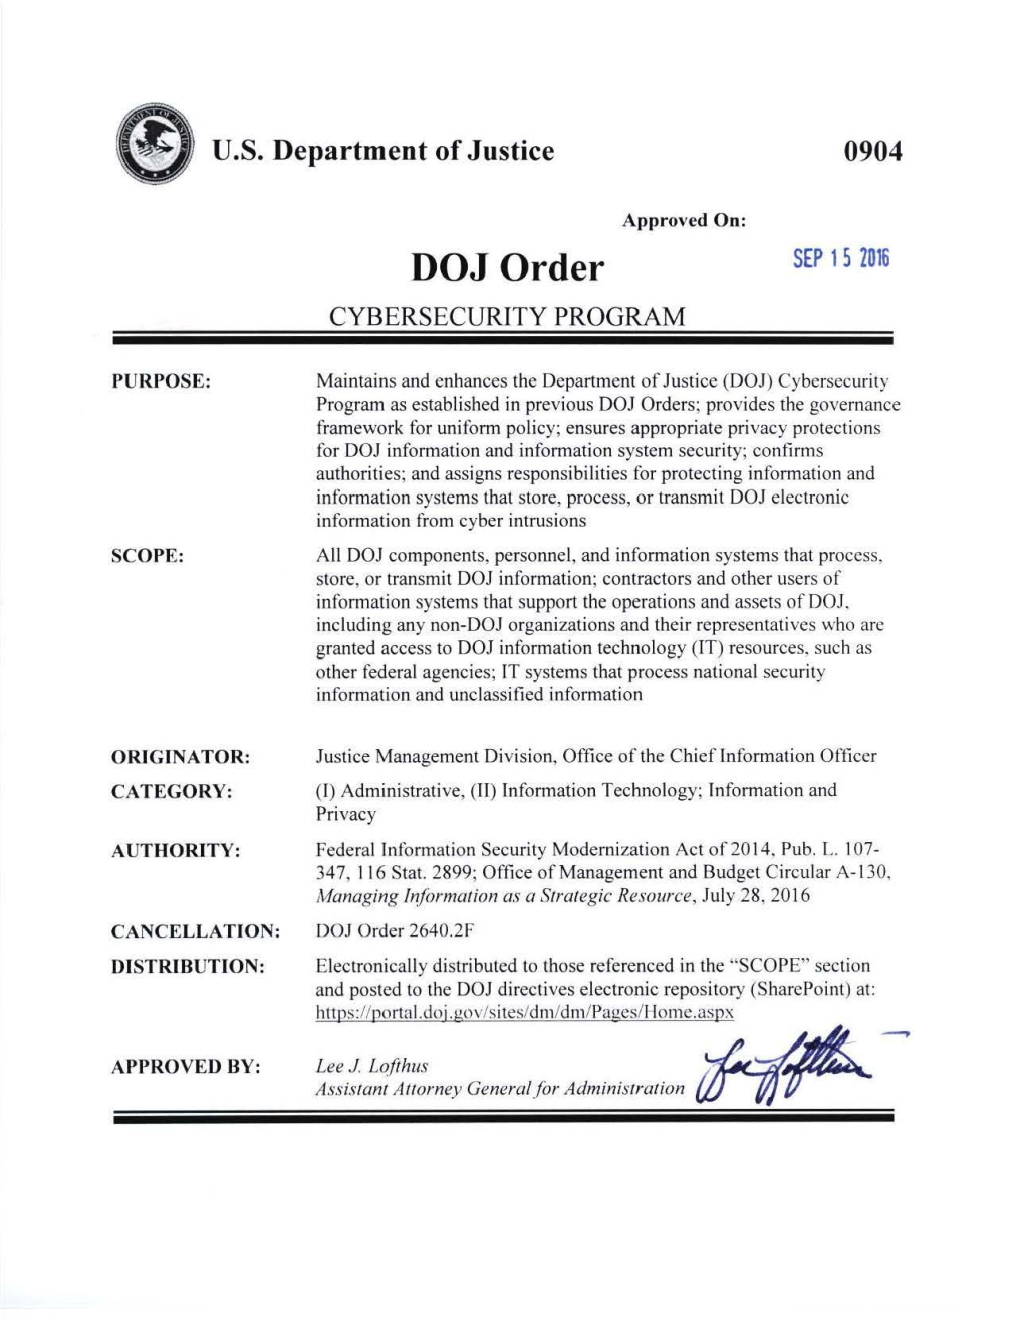 DOJ Order 0904 Cybersecurity Program, Approved on September